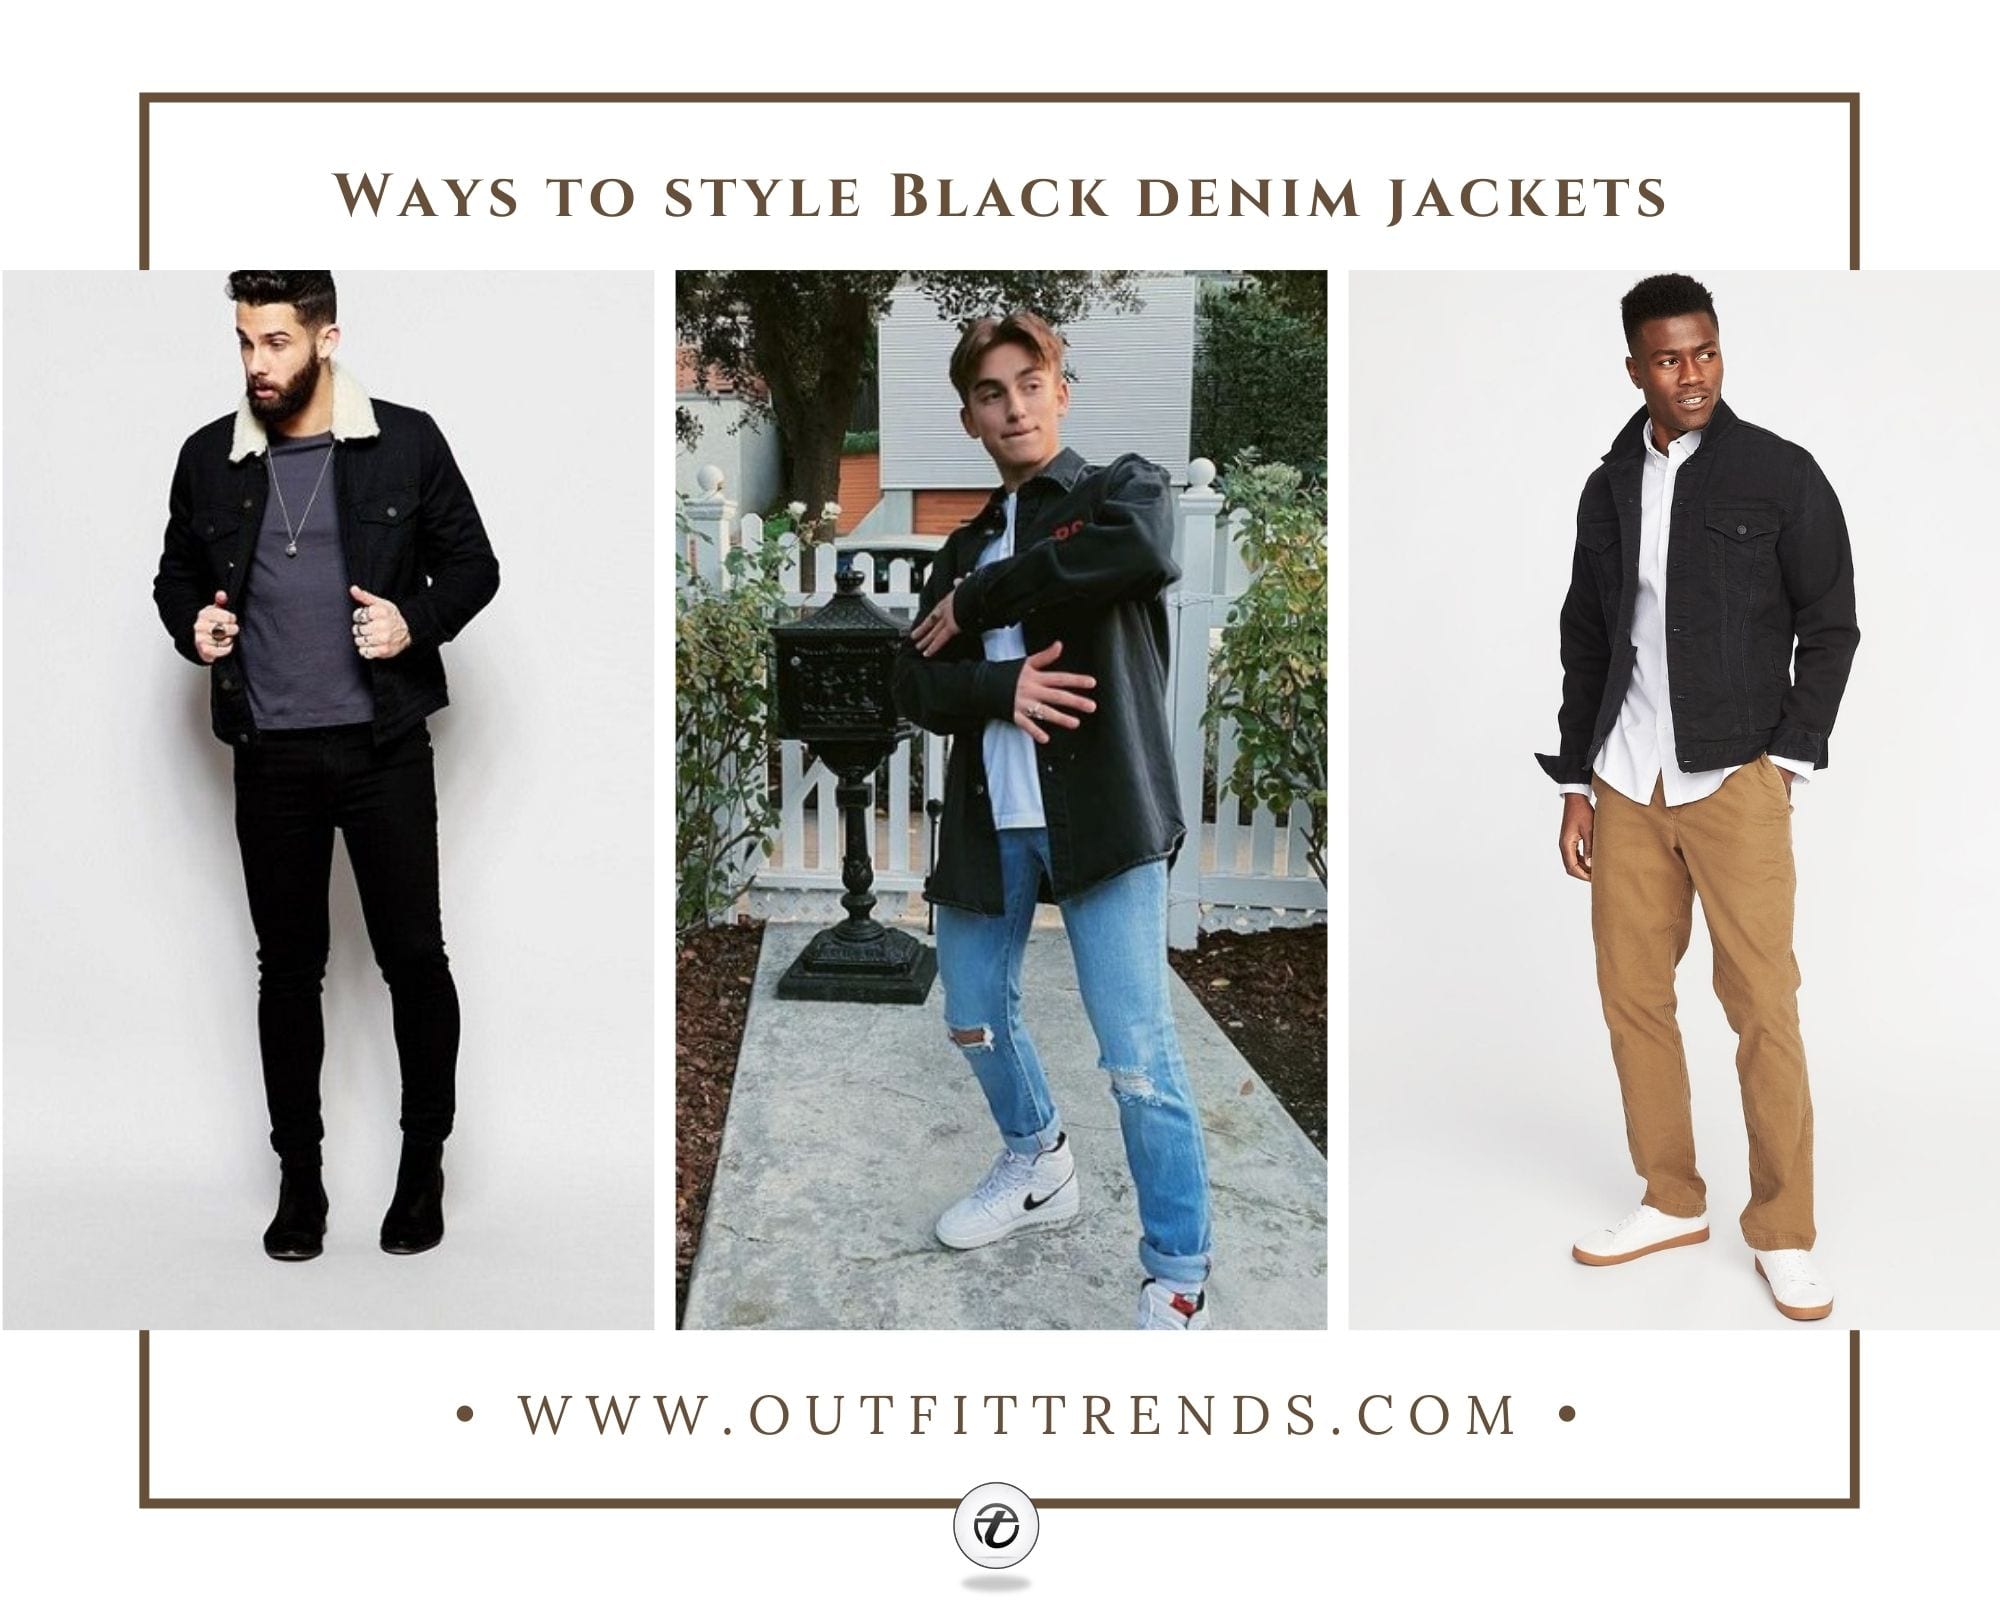 Men's Denim Jackets | Oversized Jean Jackets | Tommy Hilfiger® SI